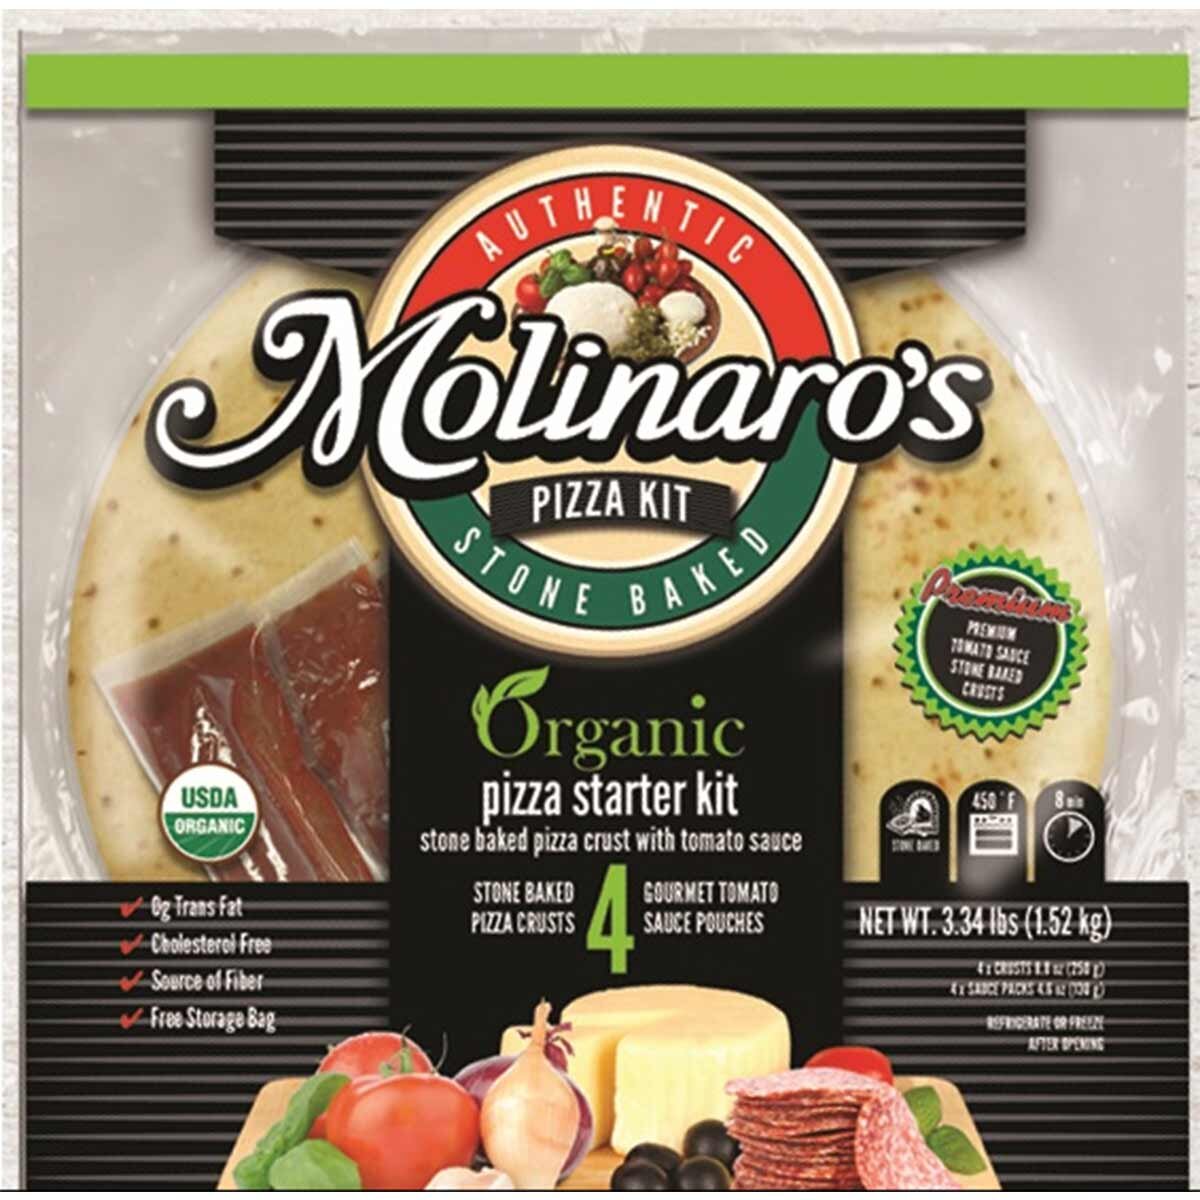 Molinaro's Organic Pizza Kit 4 Pack, 1.52kg